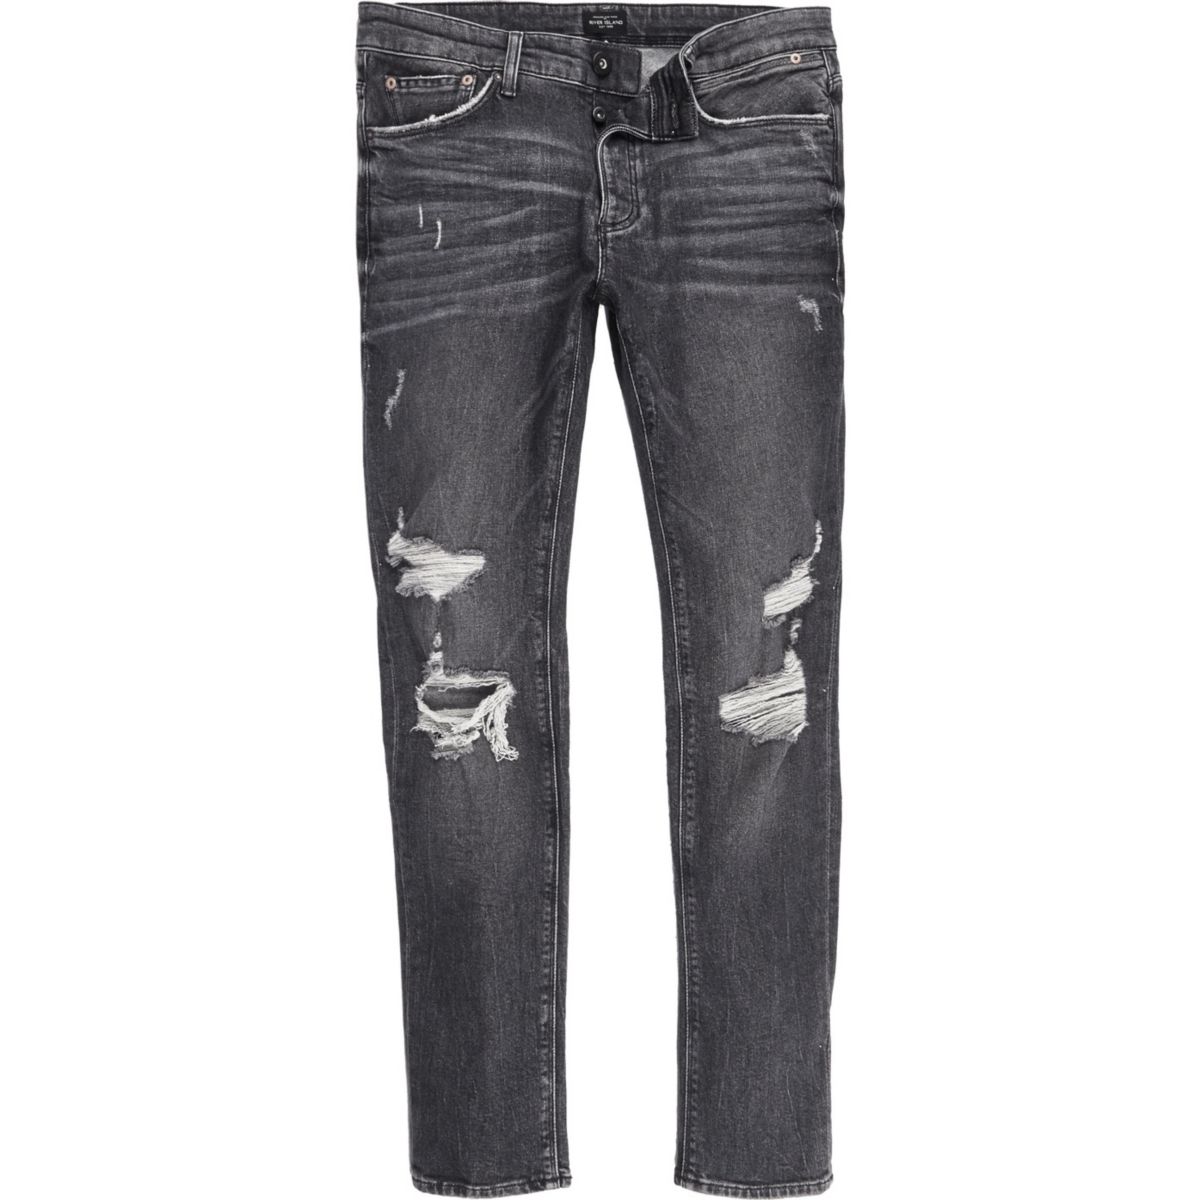 Black ripped Sid skinny jeans - Jeans - Sale - men